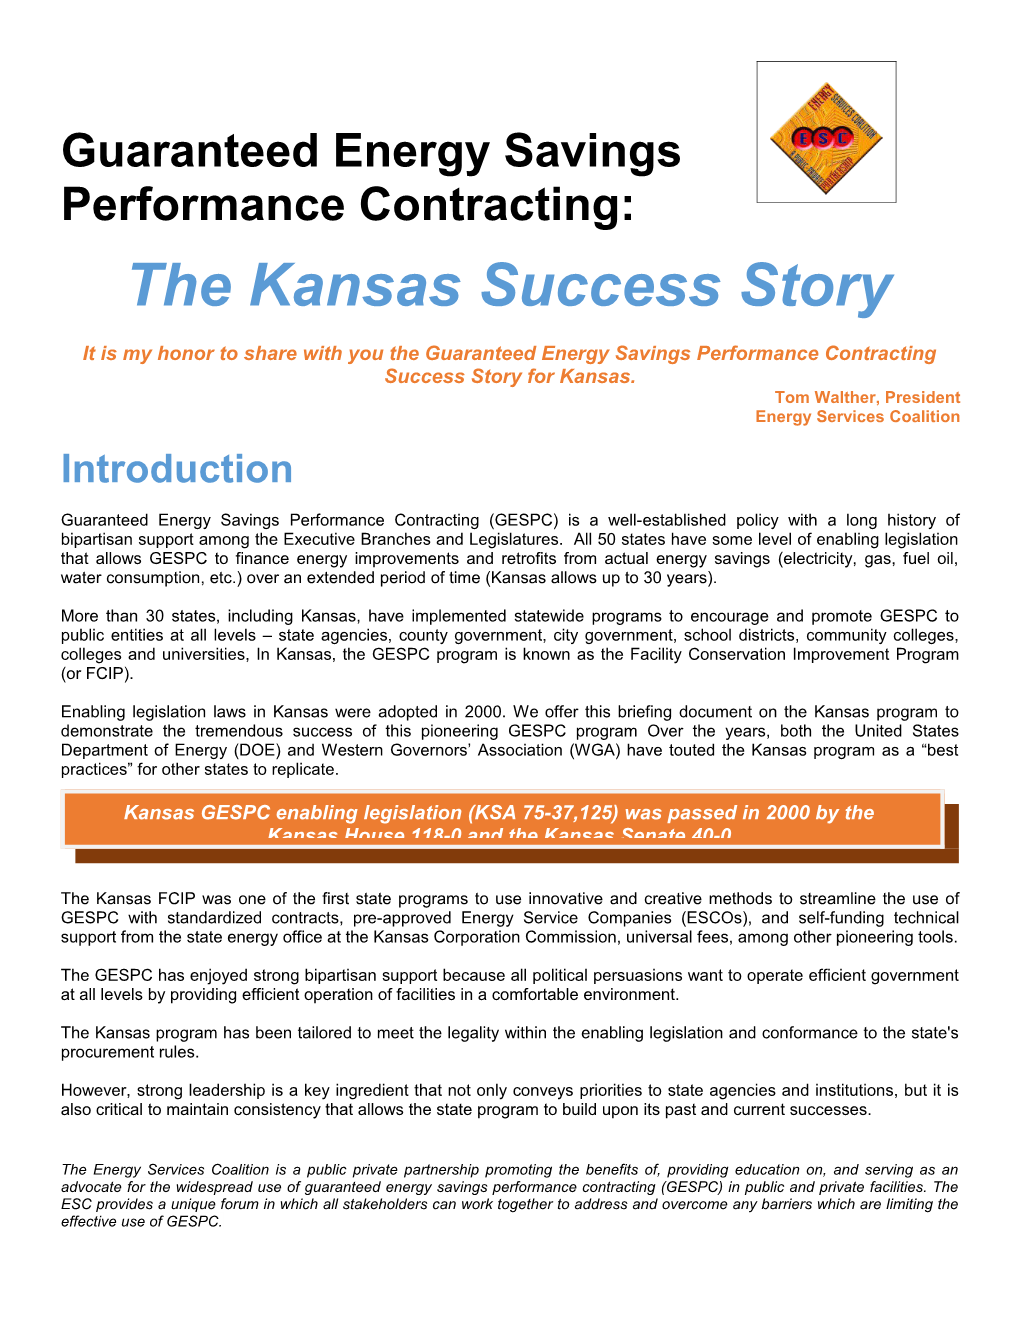 The Kansas Success Story